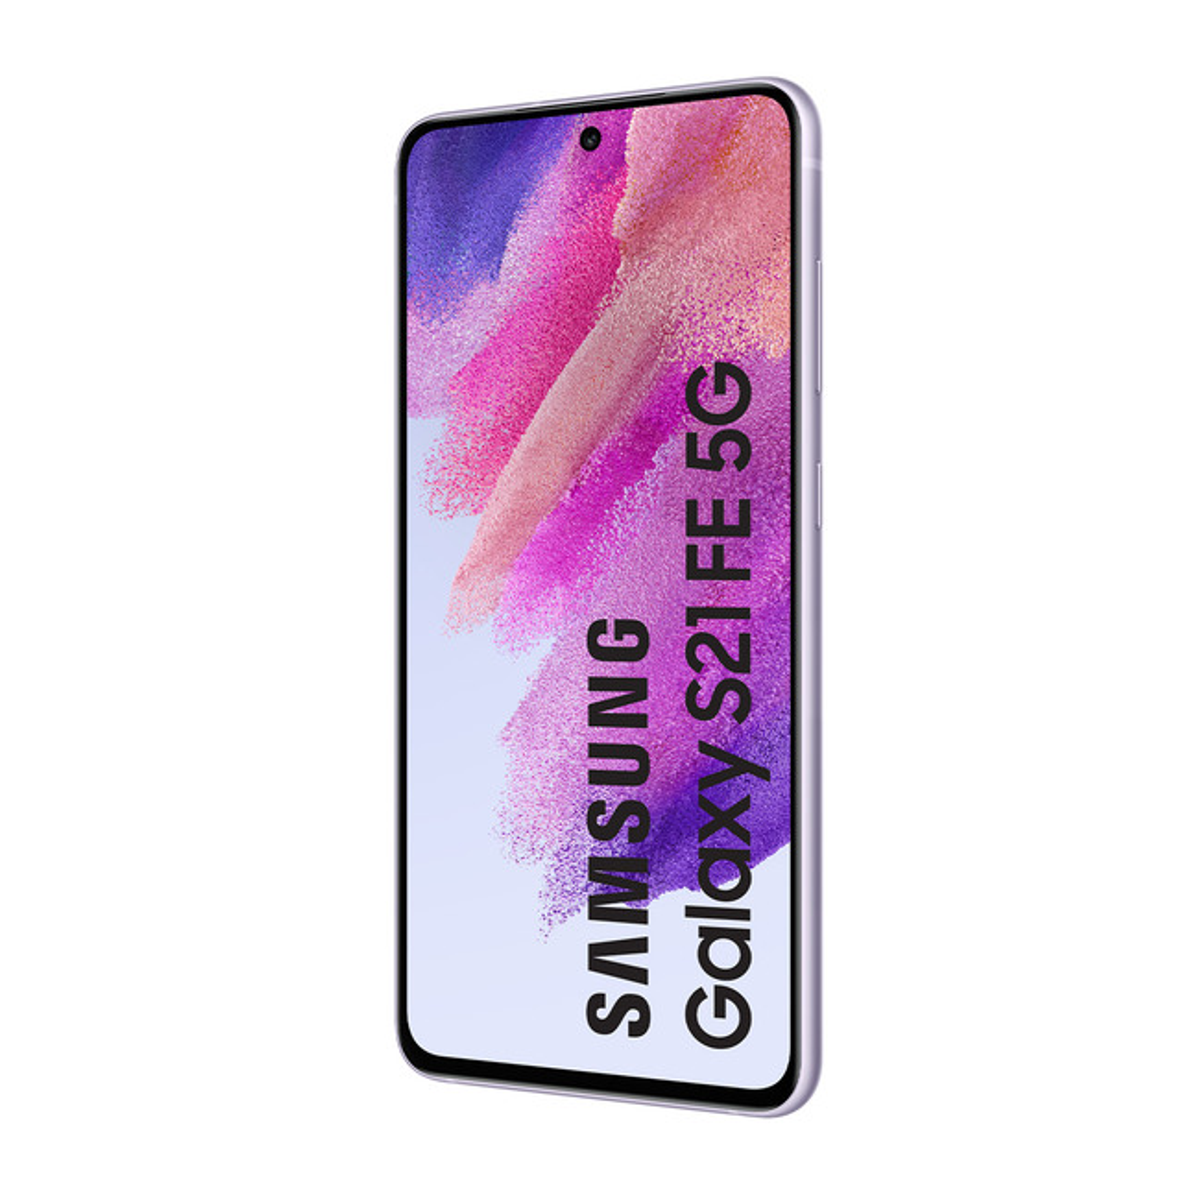 SAMSUNG GALAXY S21 FE 5G GB VIOLET LIGHT Dual Lavender SIM 128GB 128